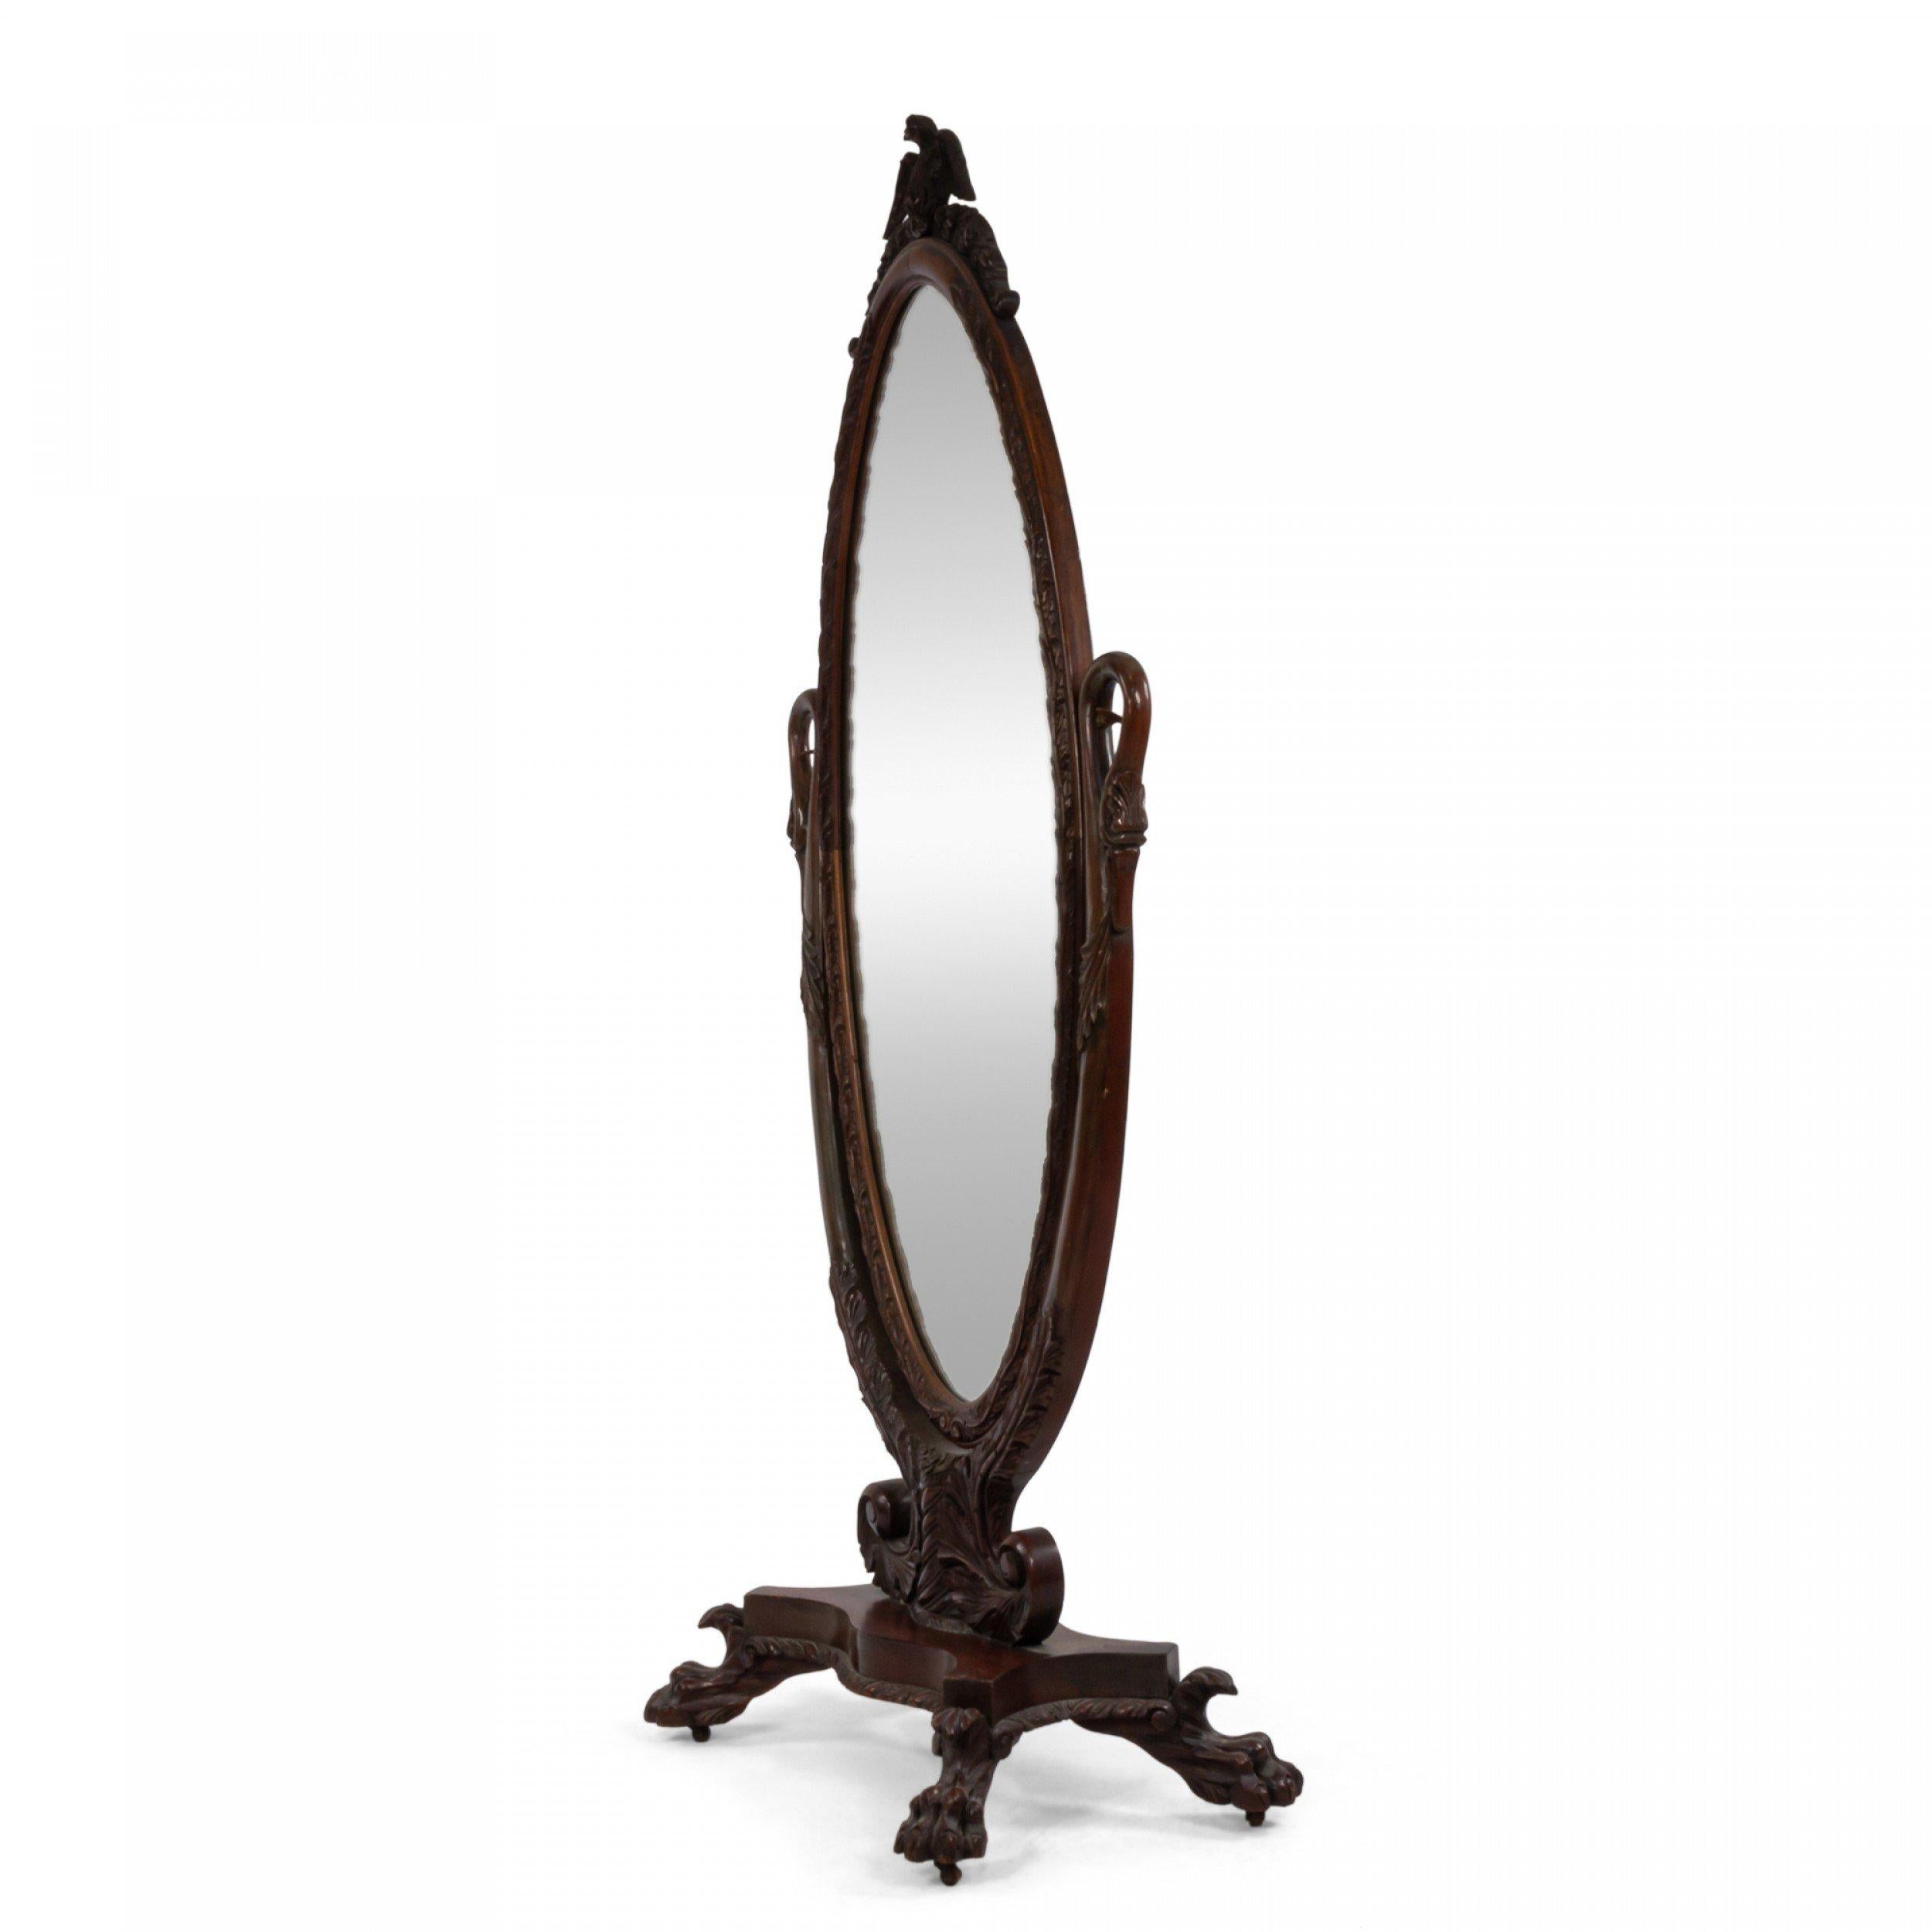 20th Century American Empire Style Zoomorphic Design Cheval Mirror For Sale